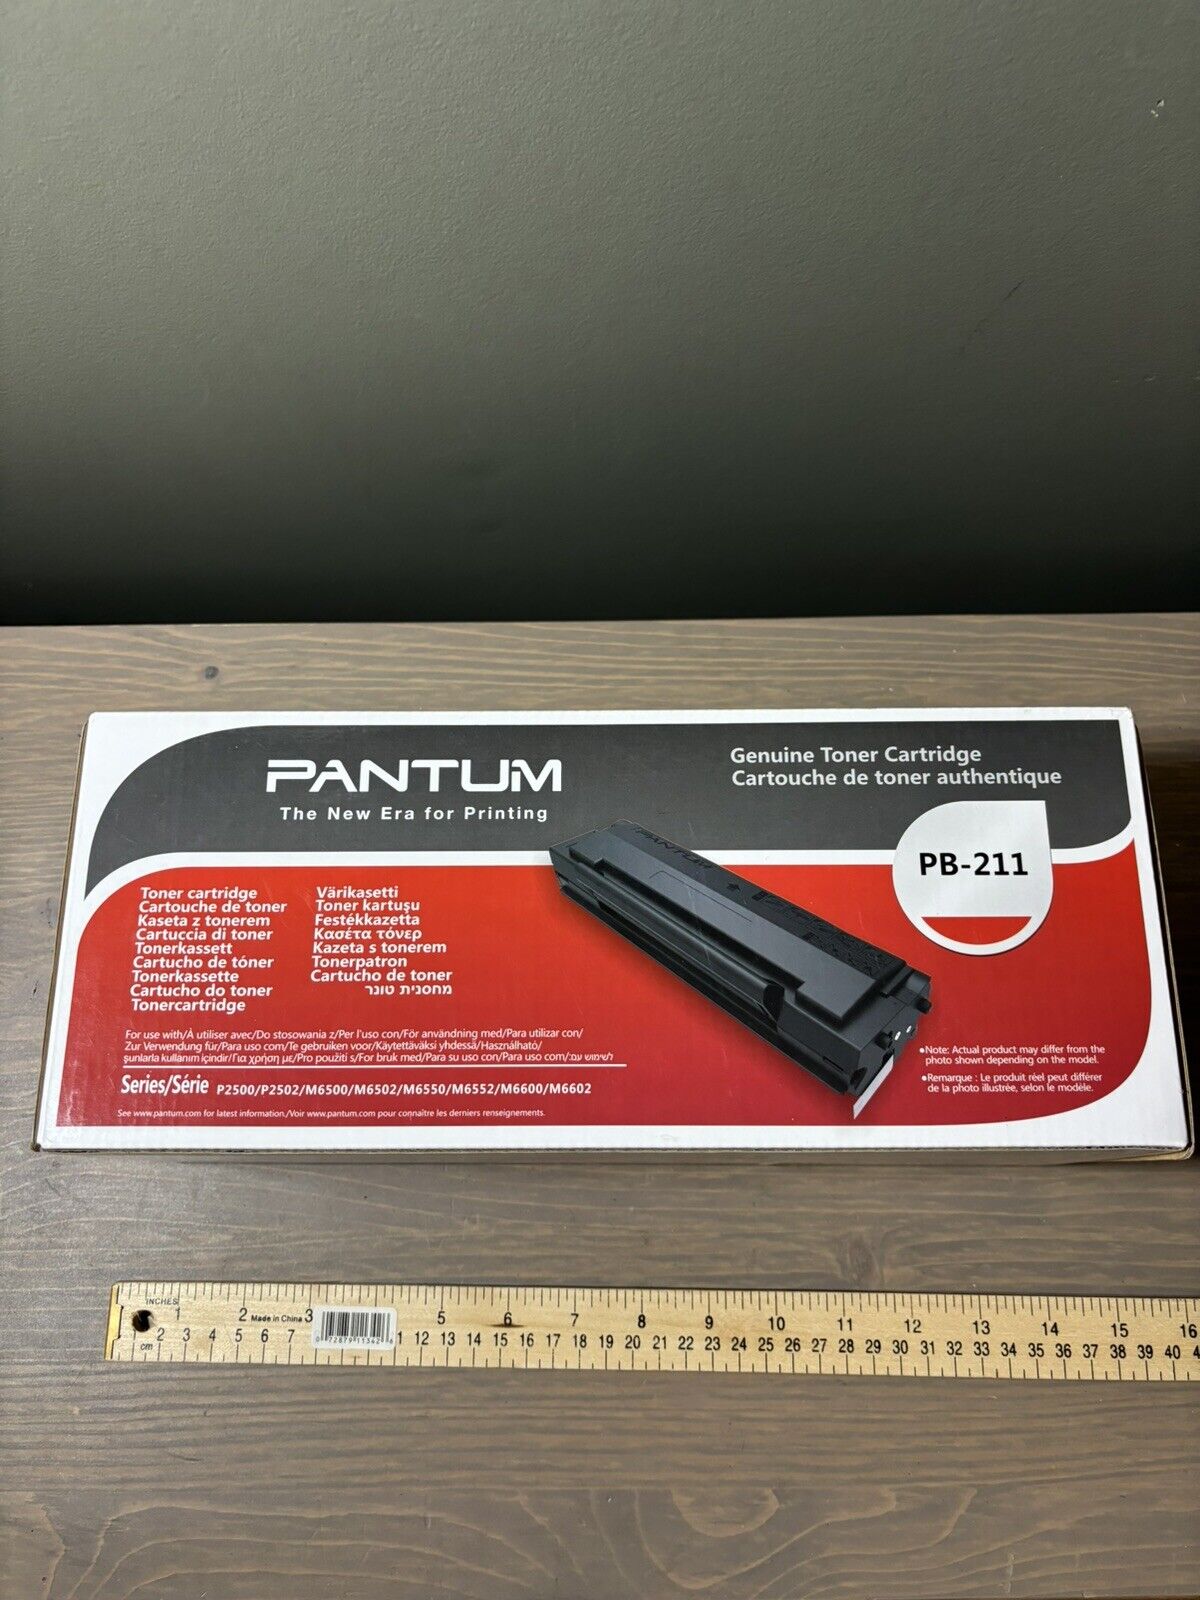 Pantum PB-211 BlackGeniune Toner CartridgeP2500 M6550 M6600 series